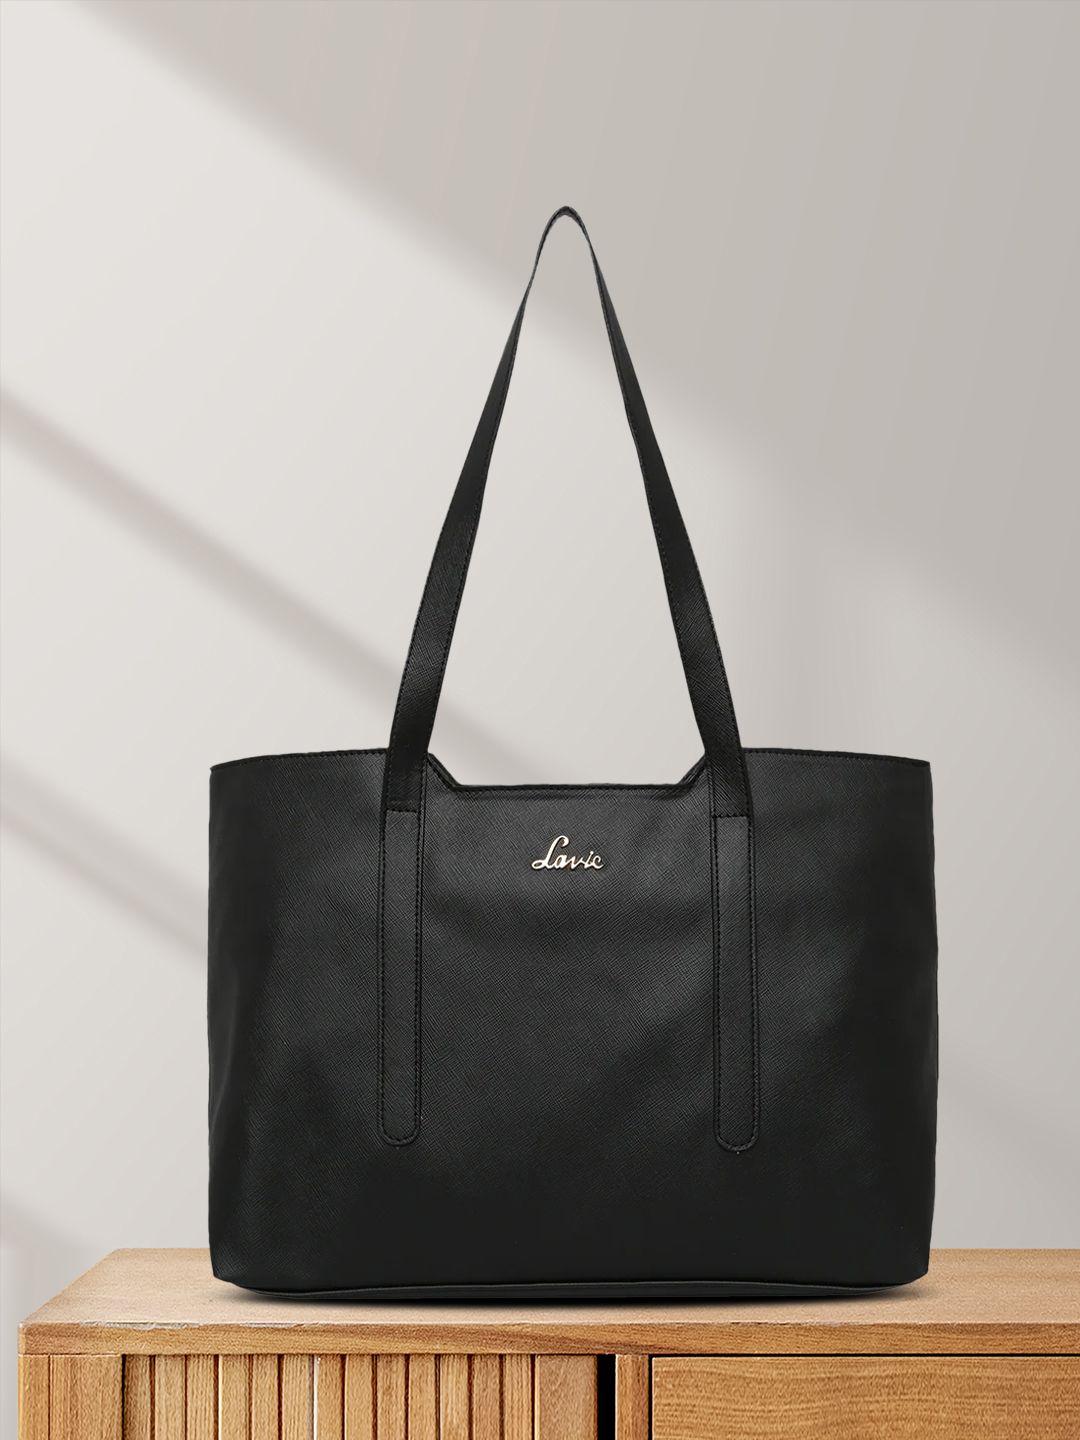 Lavie Black Solid Tote Bag